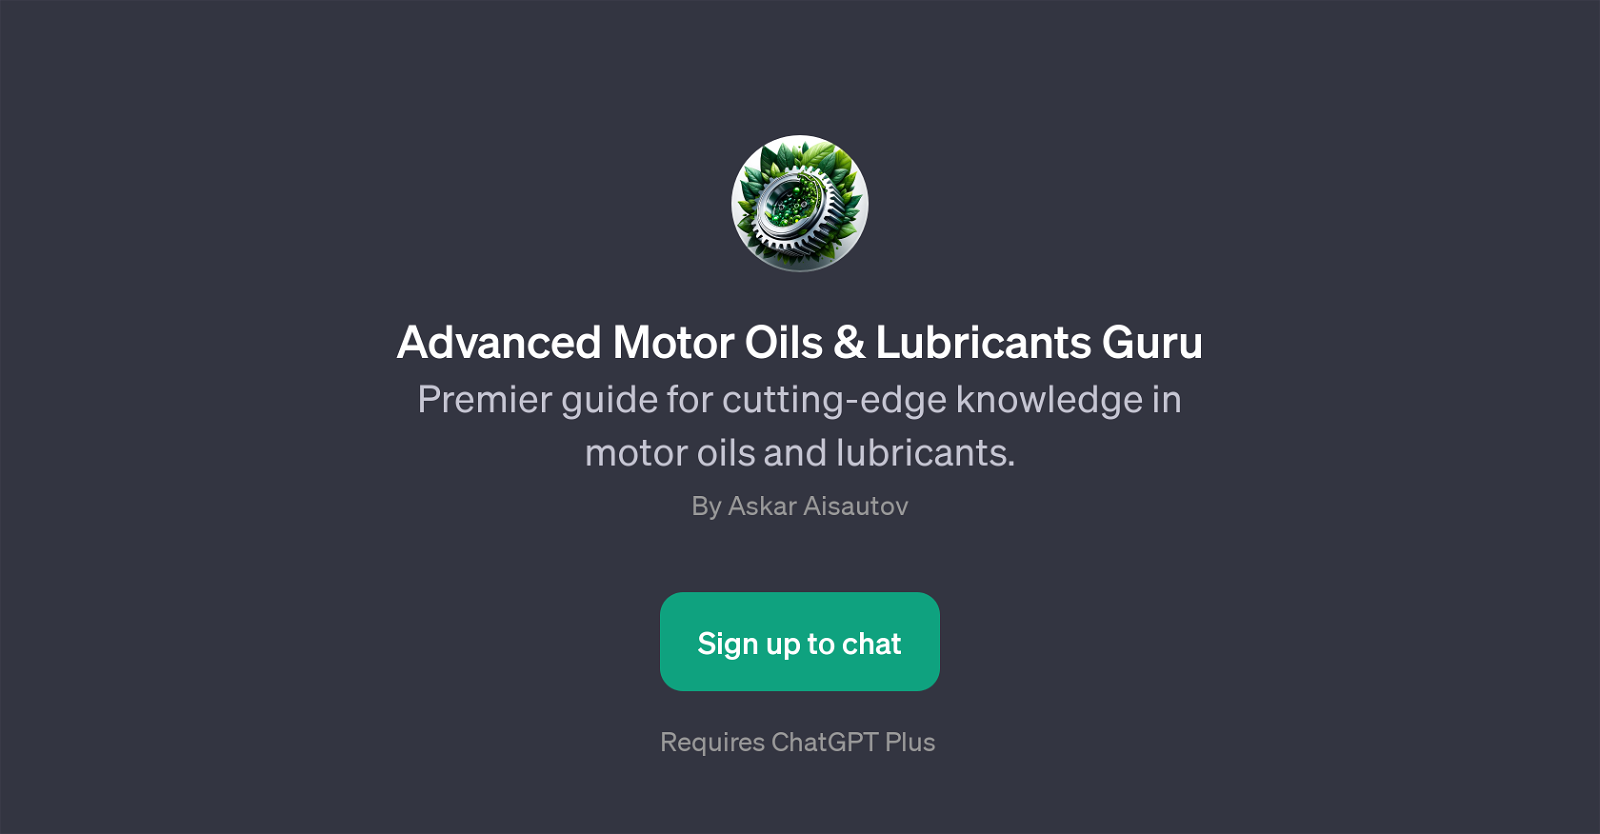 Advanced Motor Oils & Lubricants Guru website